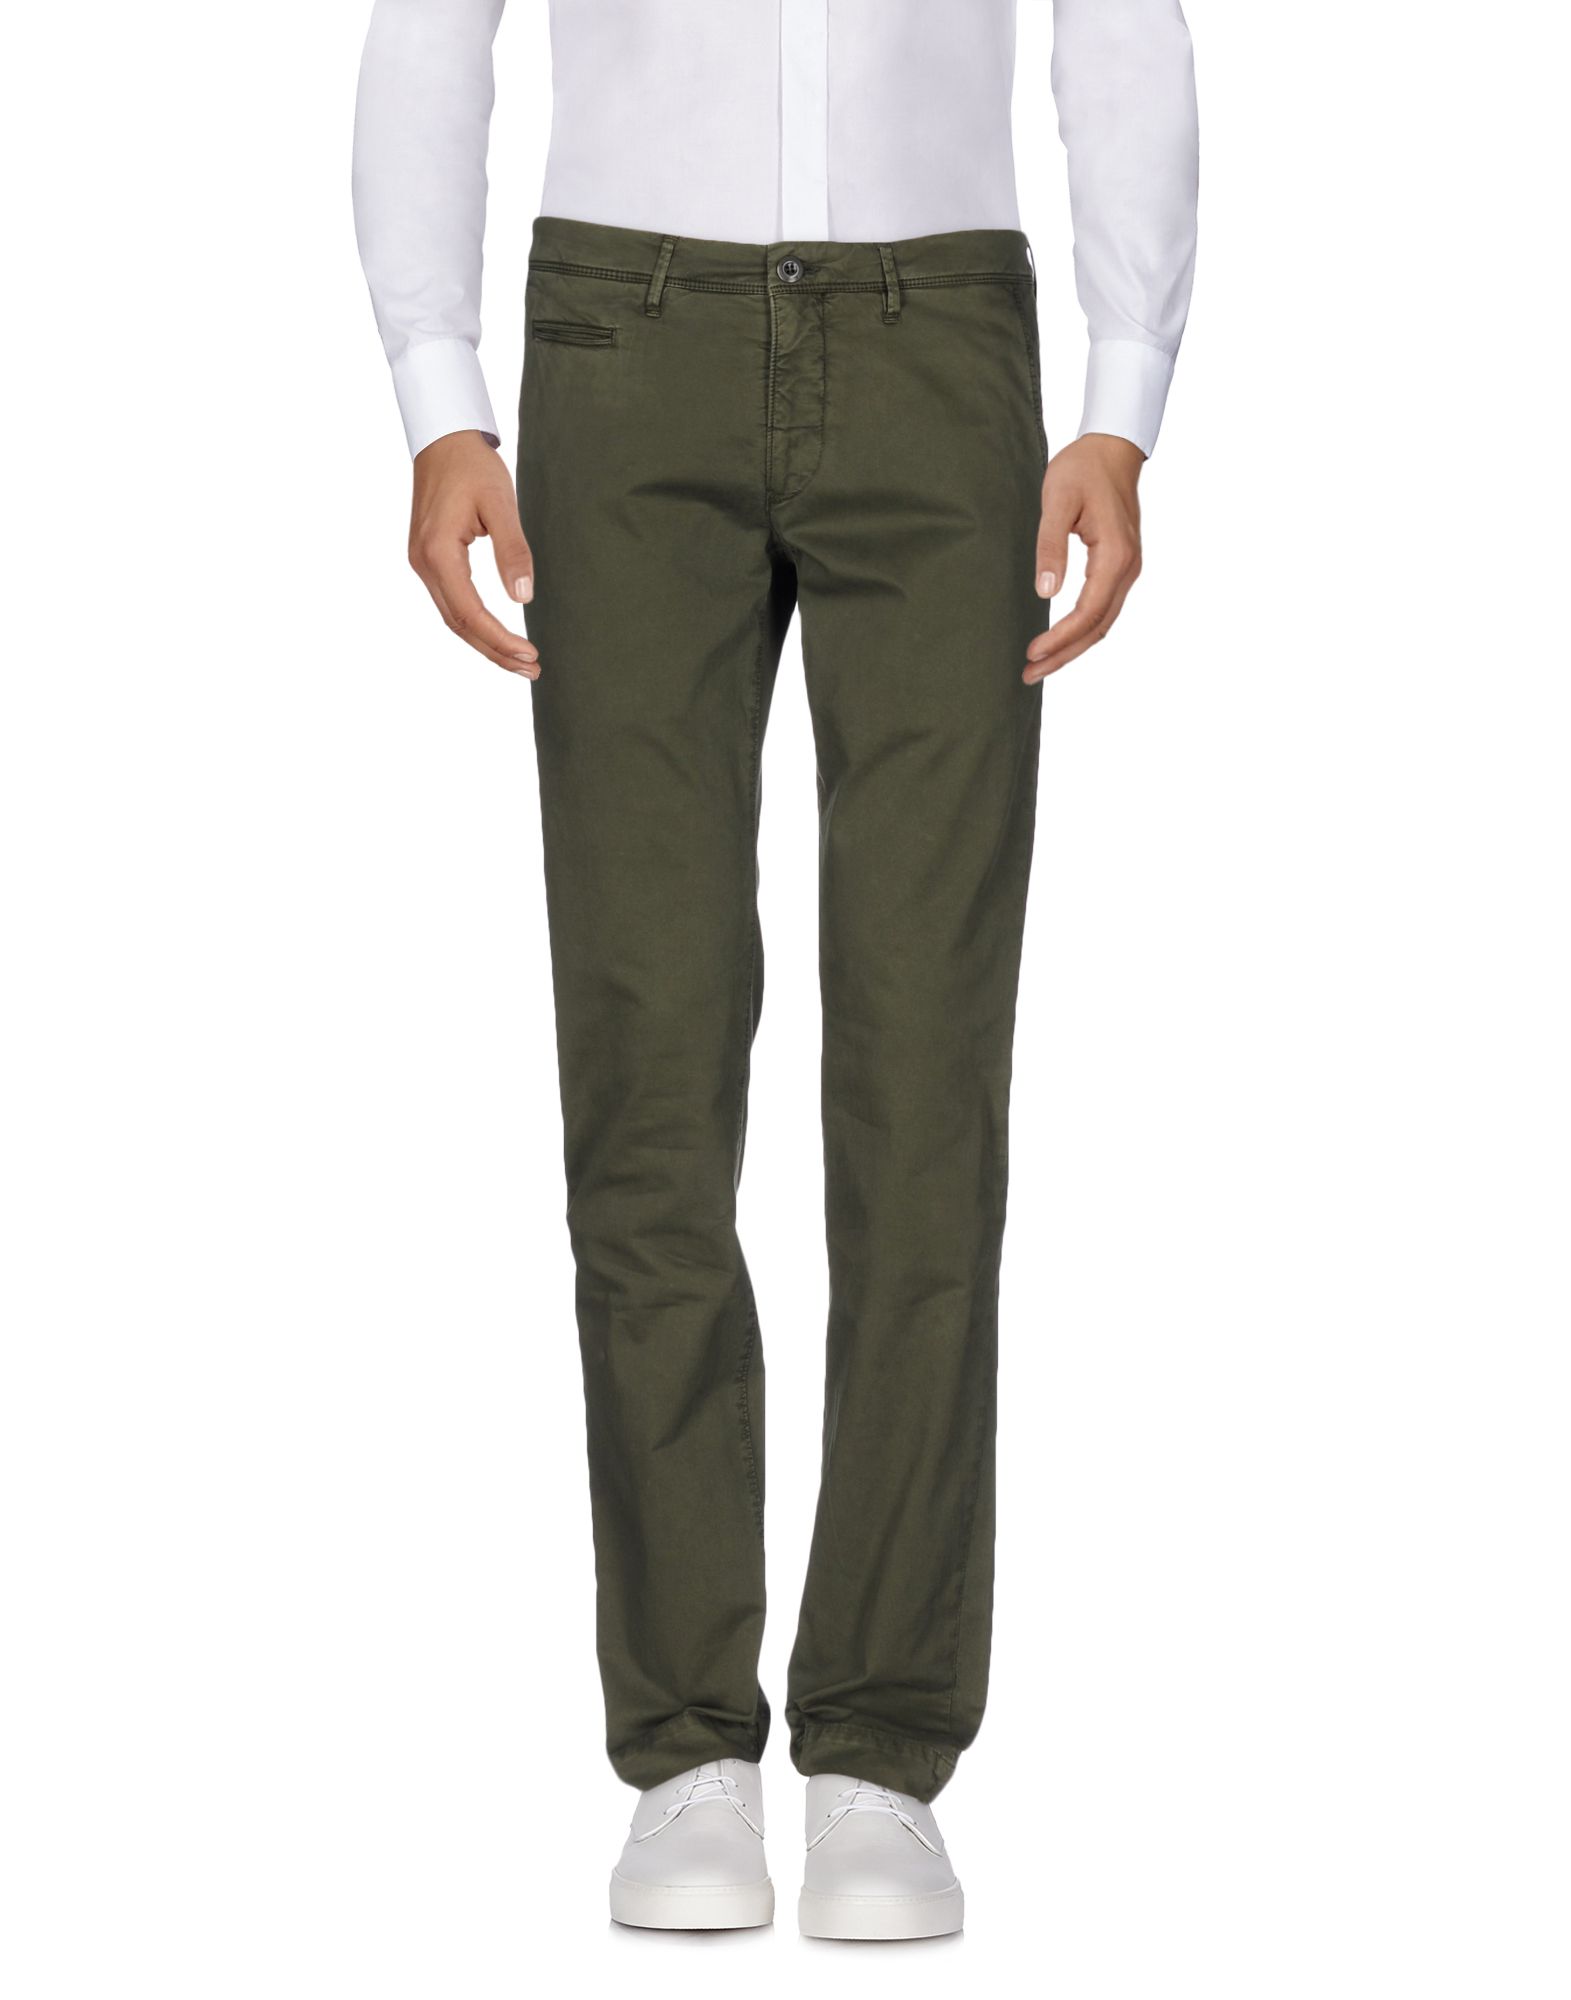 Siviglia White Pants In Military Green